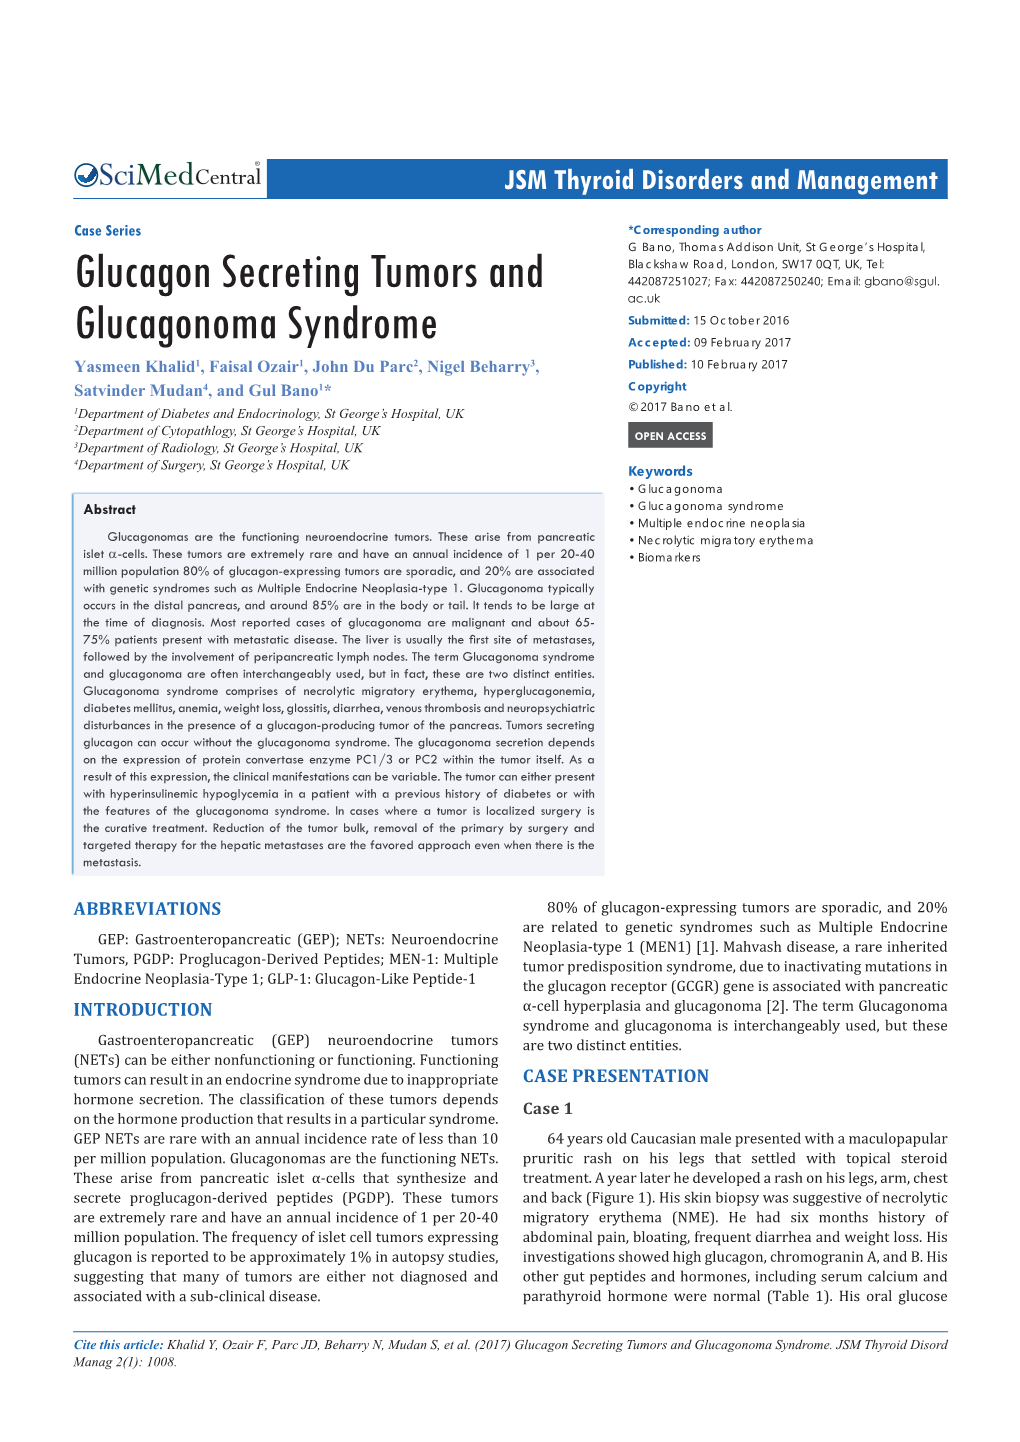 Glucagon Secreting Tumors And Glucagonoma Syndrome Docslib